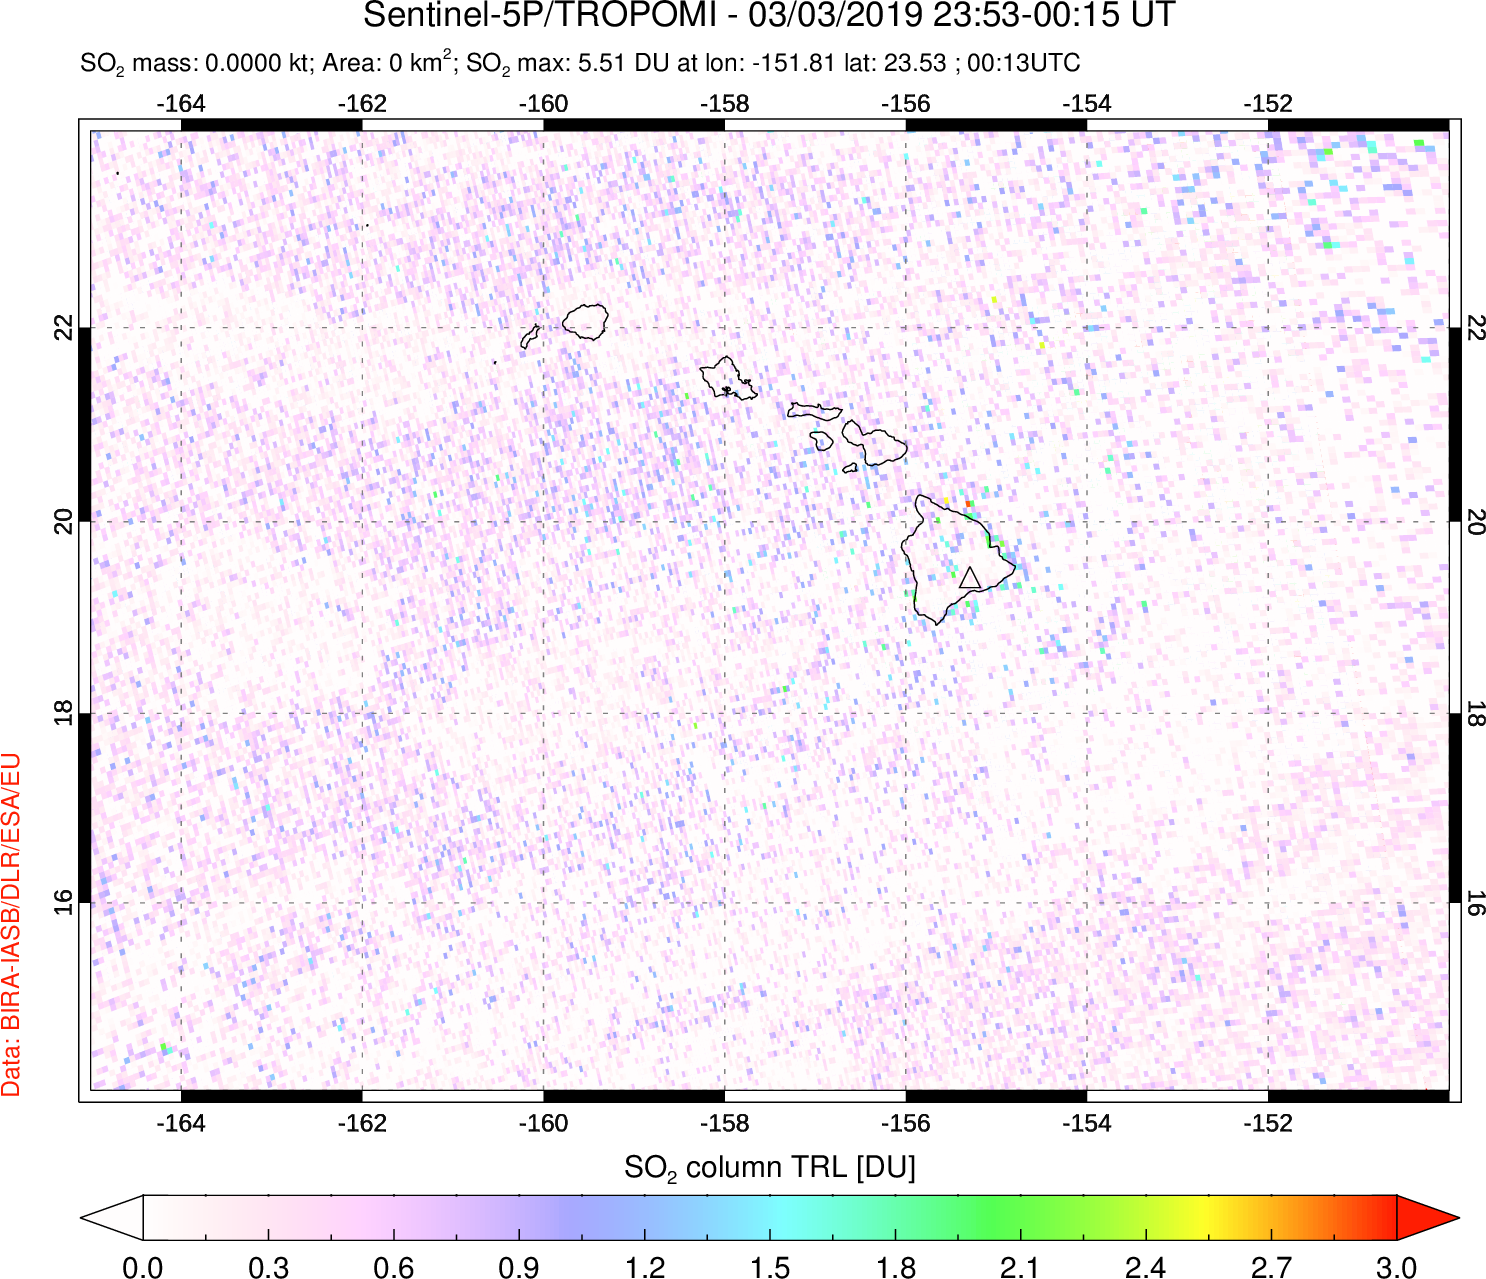 A sulfur dioxide image over Hawaii, USA on Mar 03, 2019.